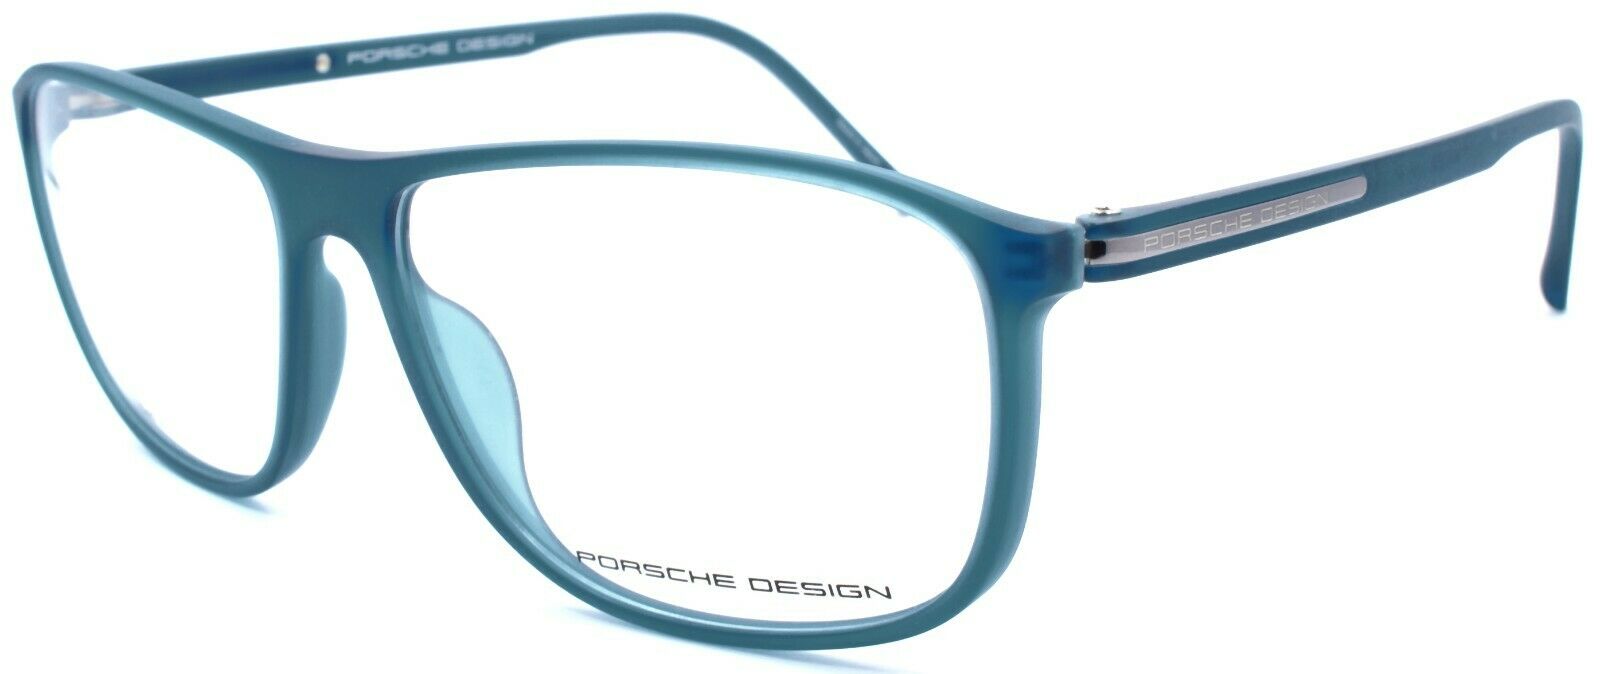 1-Porsche Design P8278 B Eyeglasses Frames 58-14-145 Turquoise-4046901901370-IKSpecs